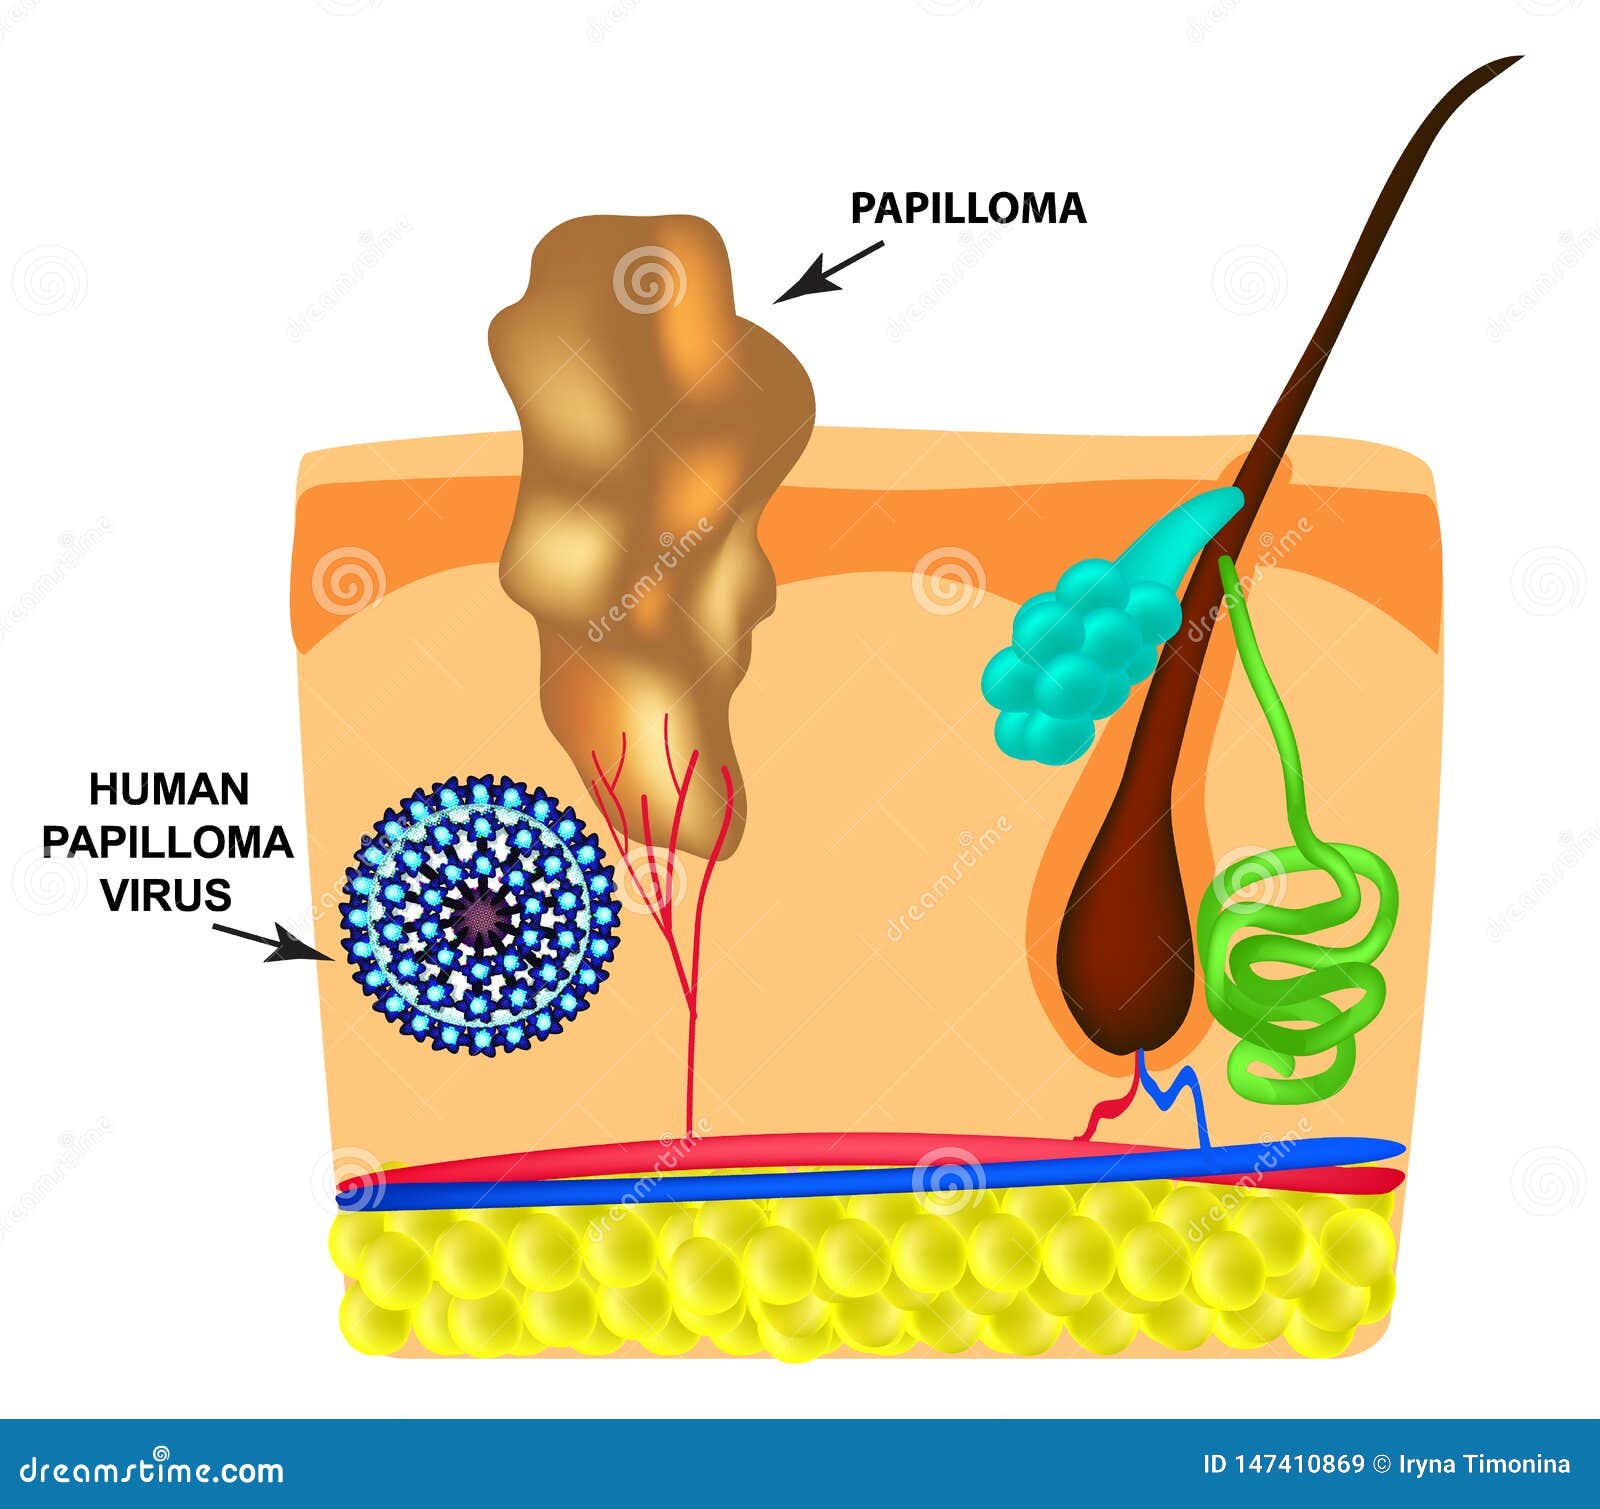 skin papilloma causes